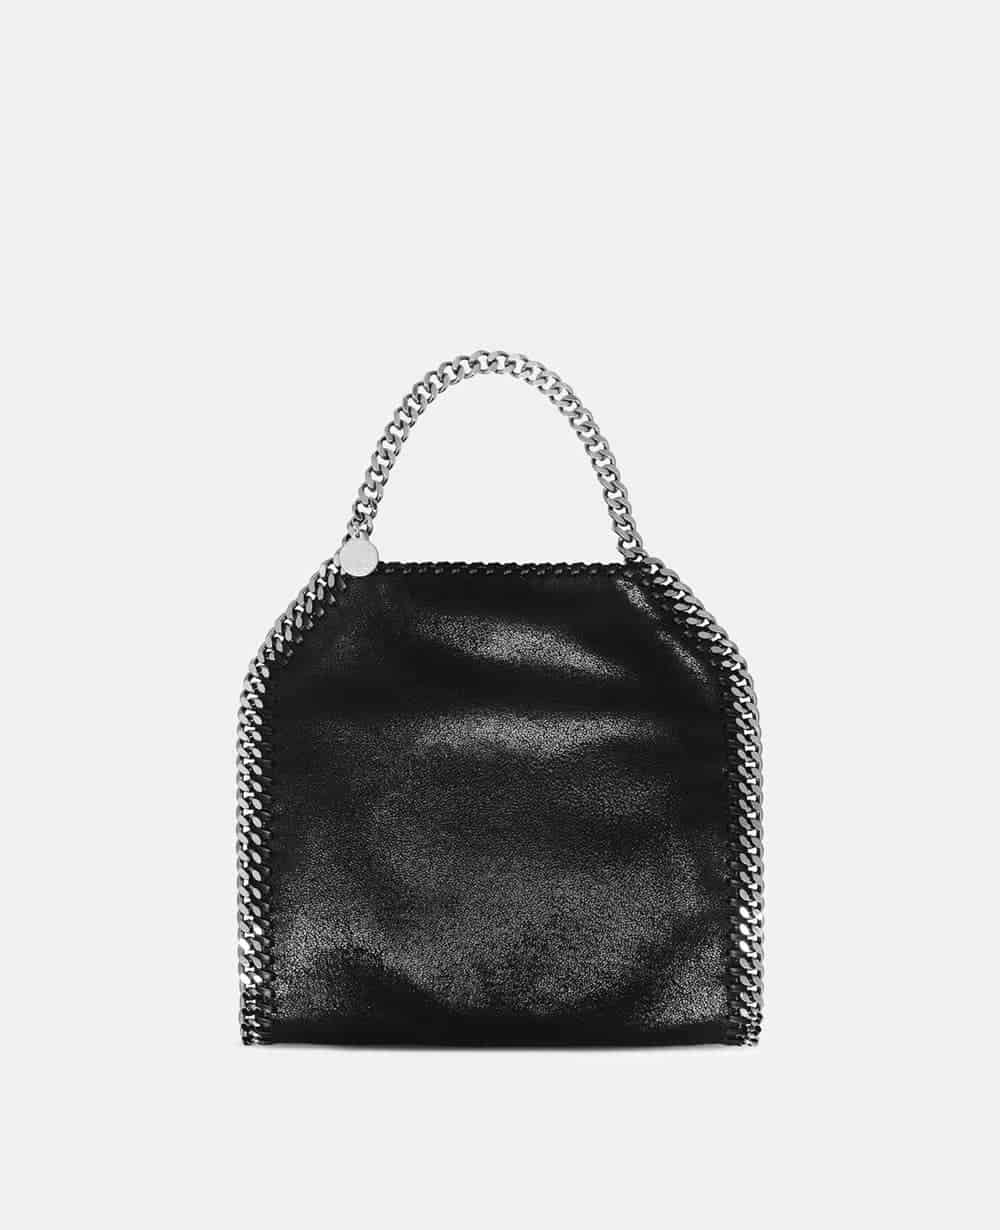 Black vegan leather bag with signature chain mail strap from Stella McCartney: Falabella mini tote